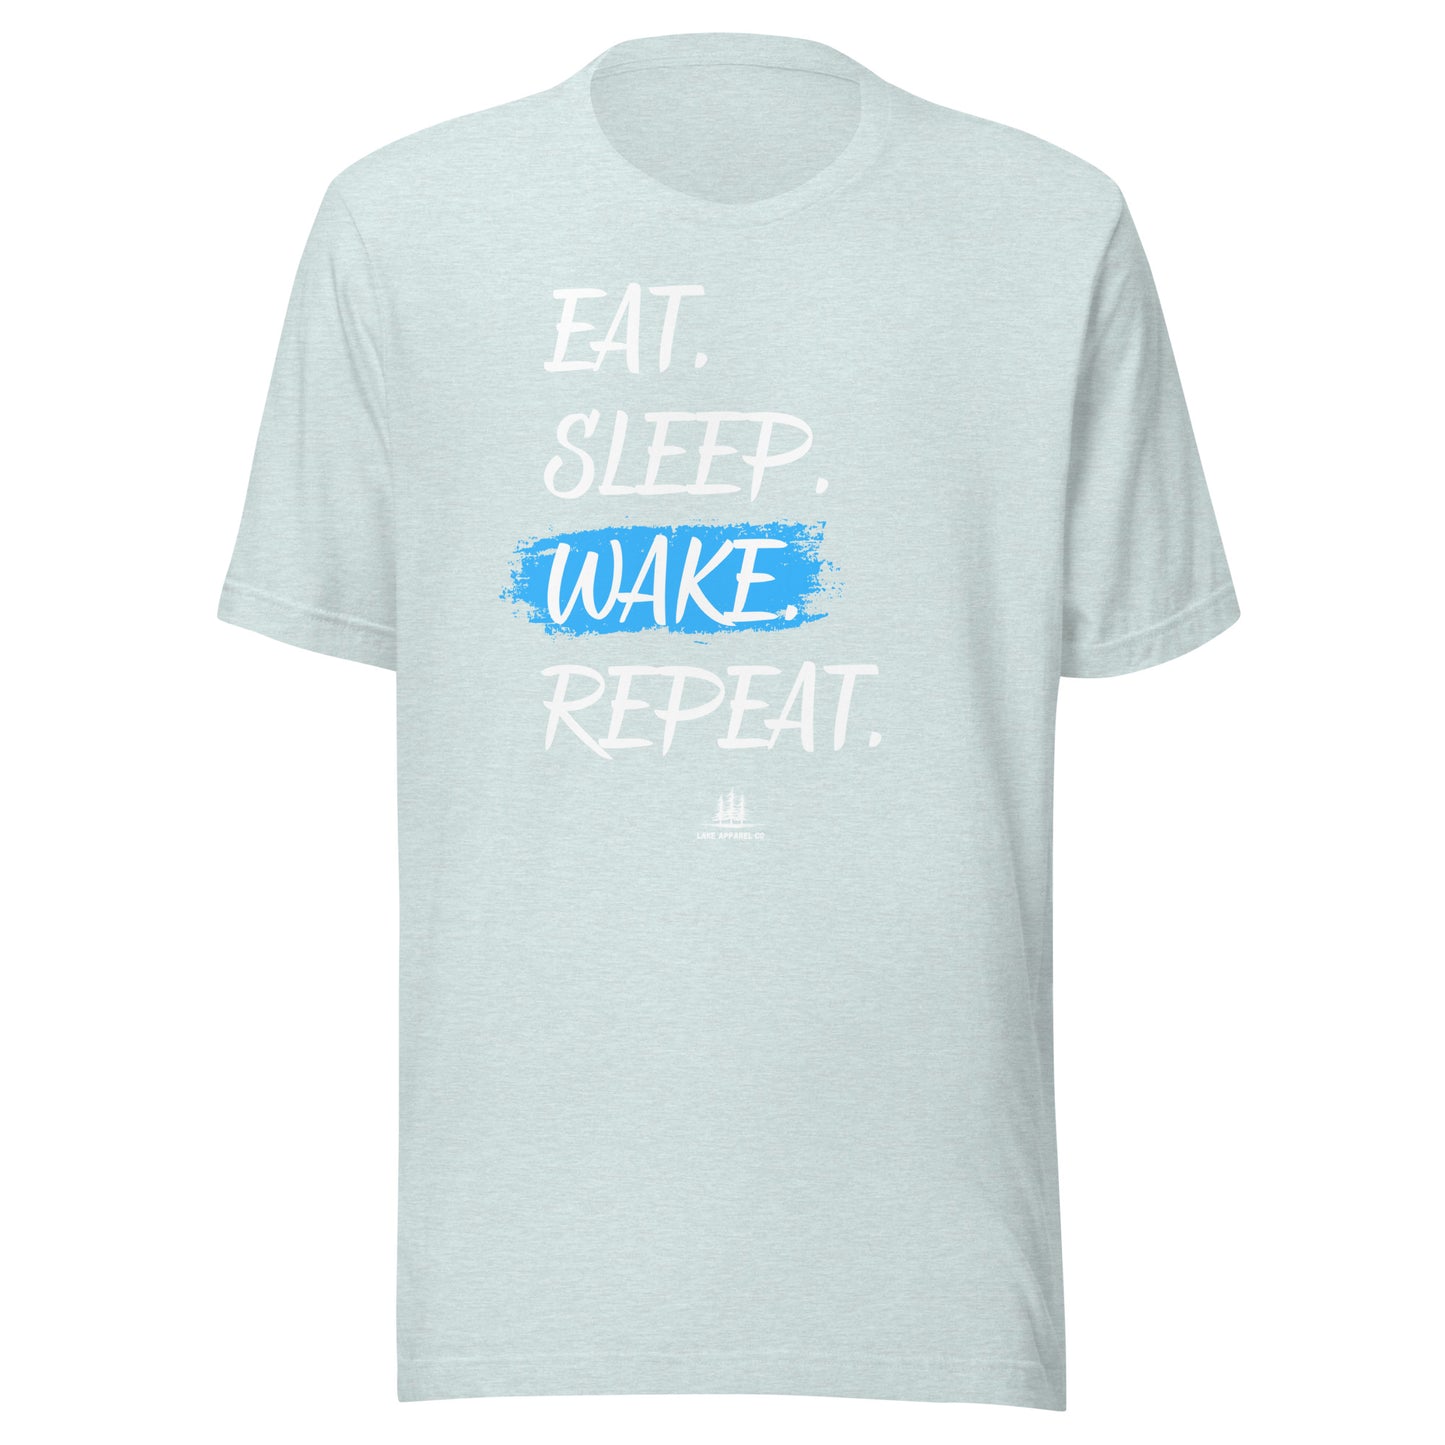 Eat, Sleep, Wake, Repeat - Unisex t-shirt